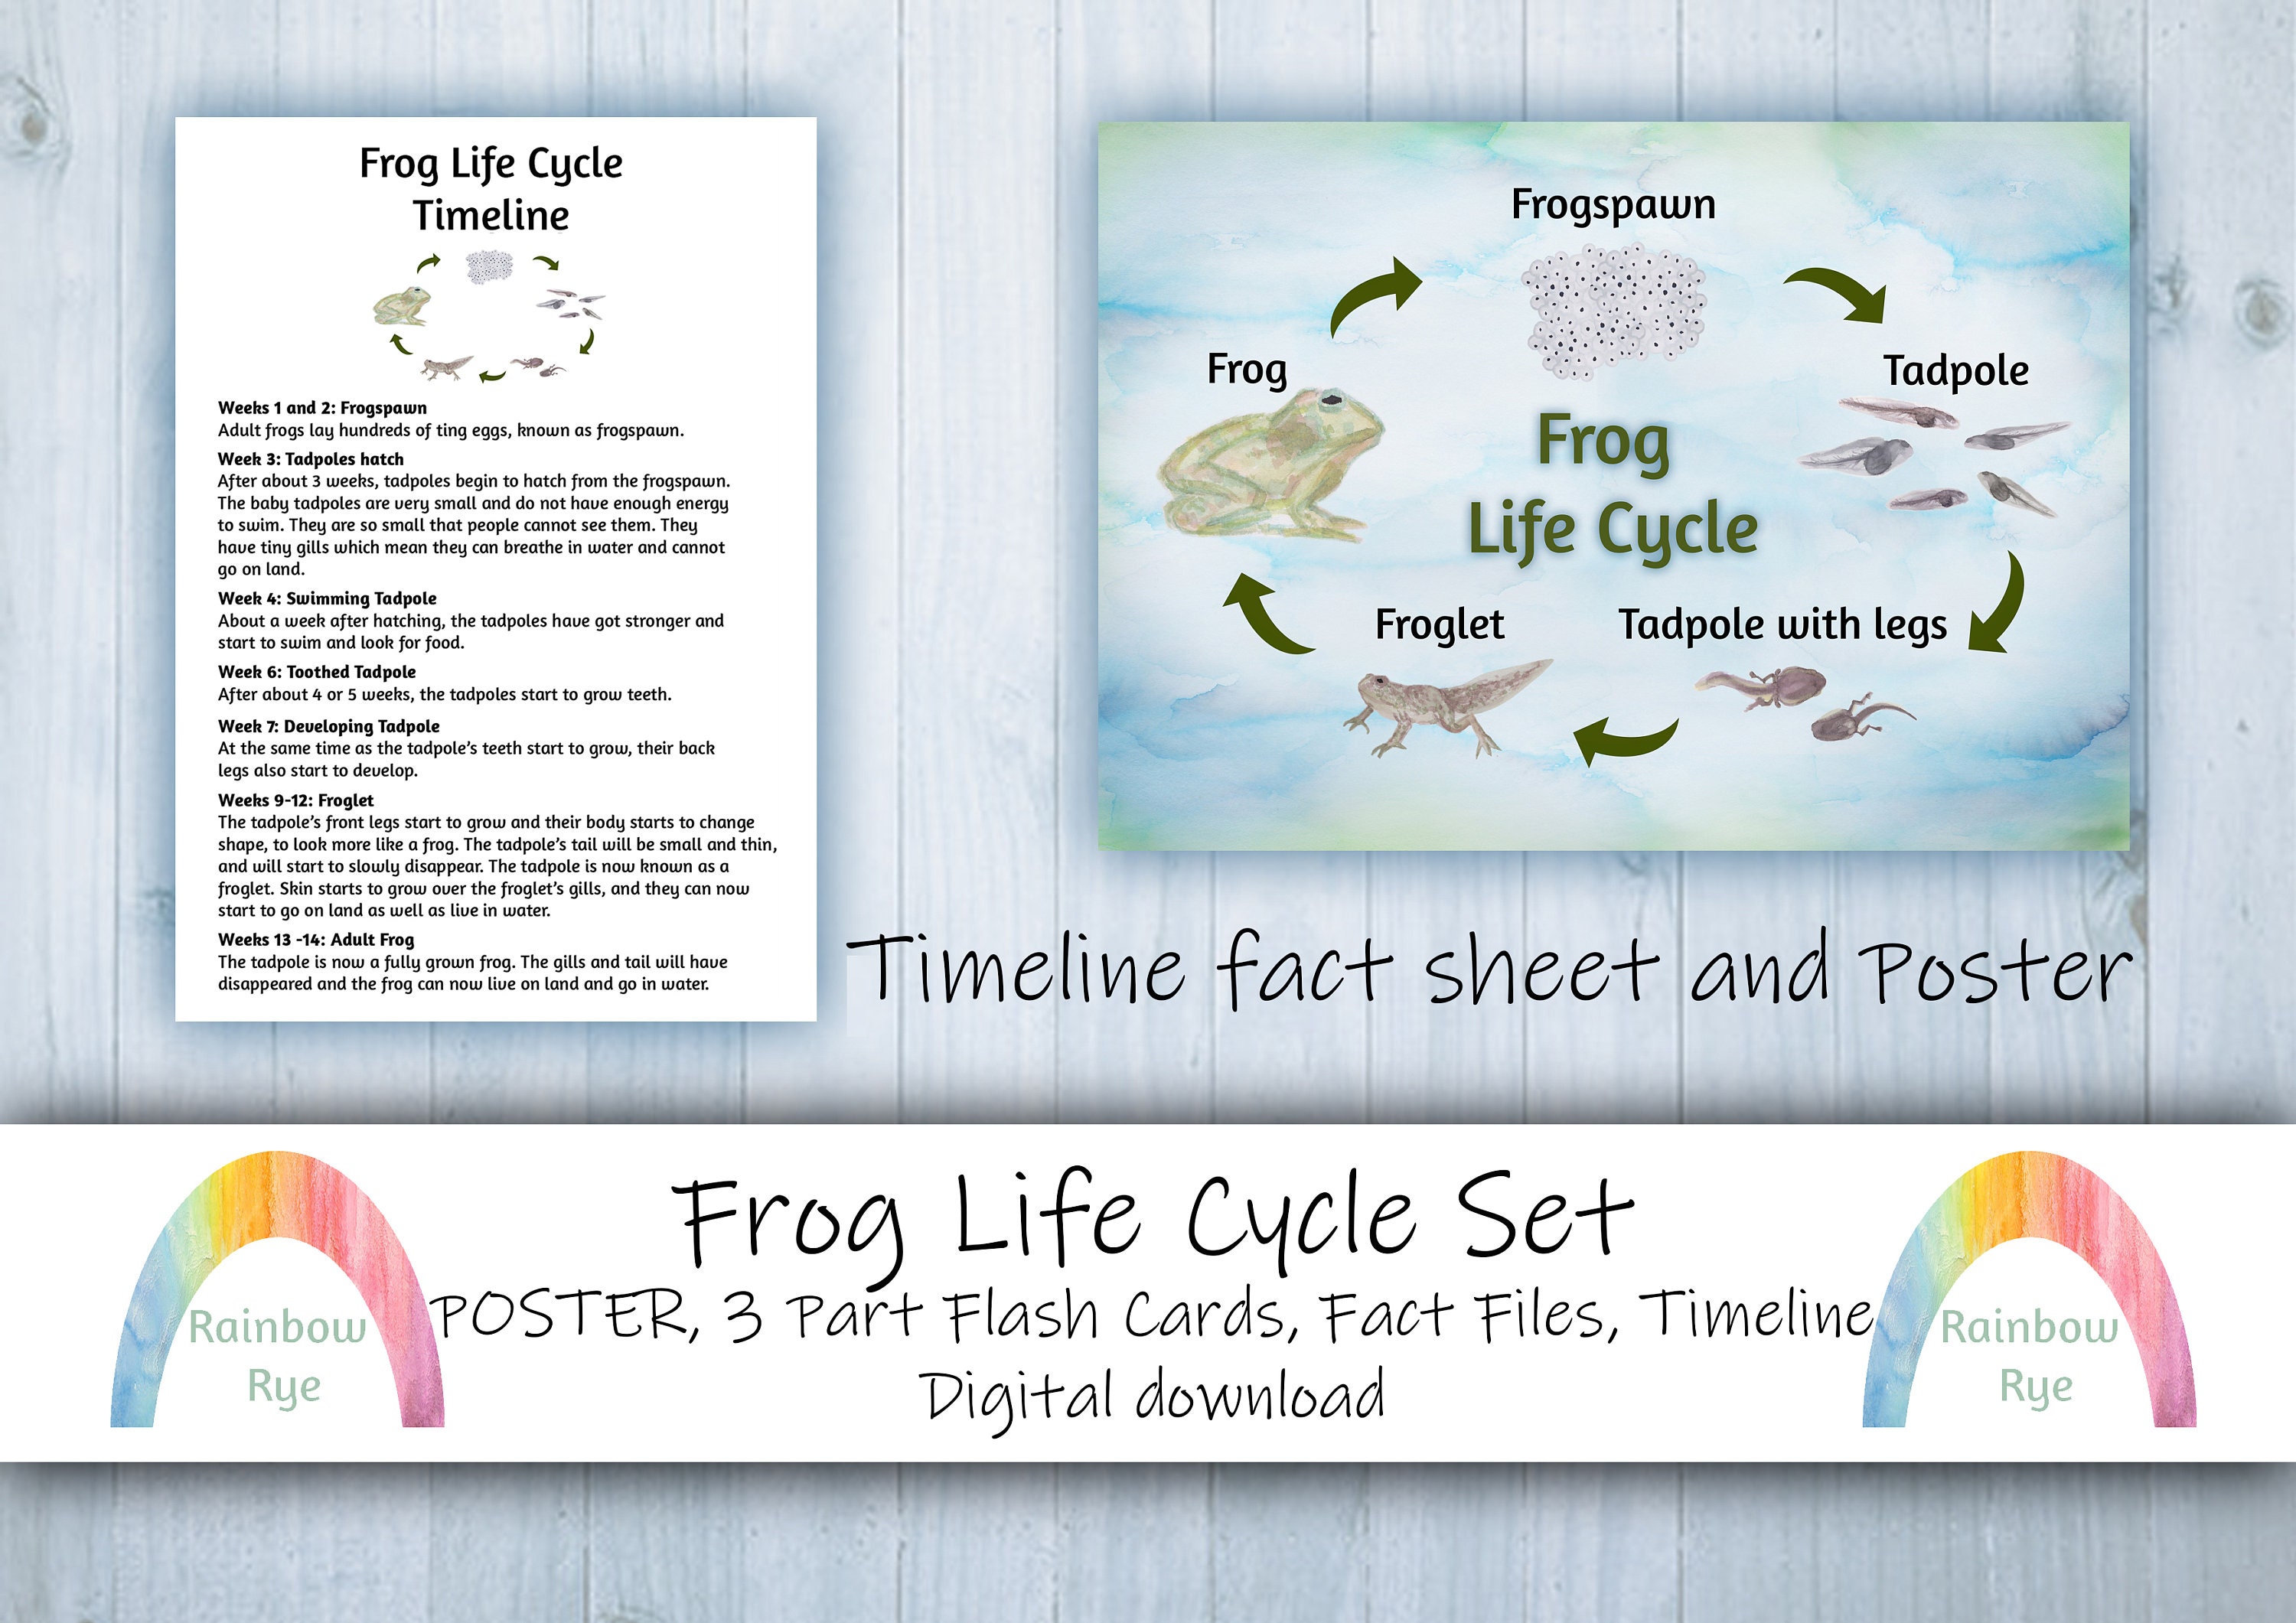 Frog Life Cycle Set Flash Cards Fact File Poster Timeline Digital Download  